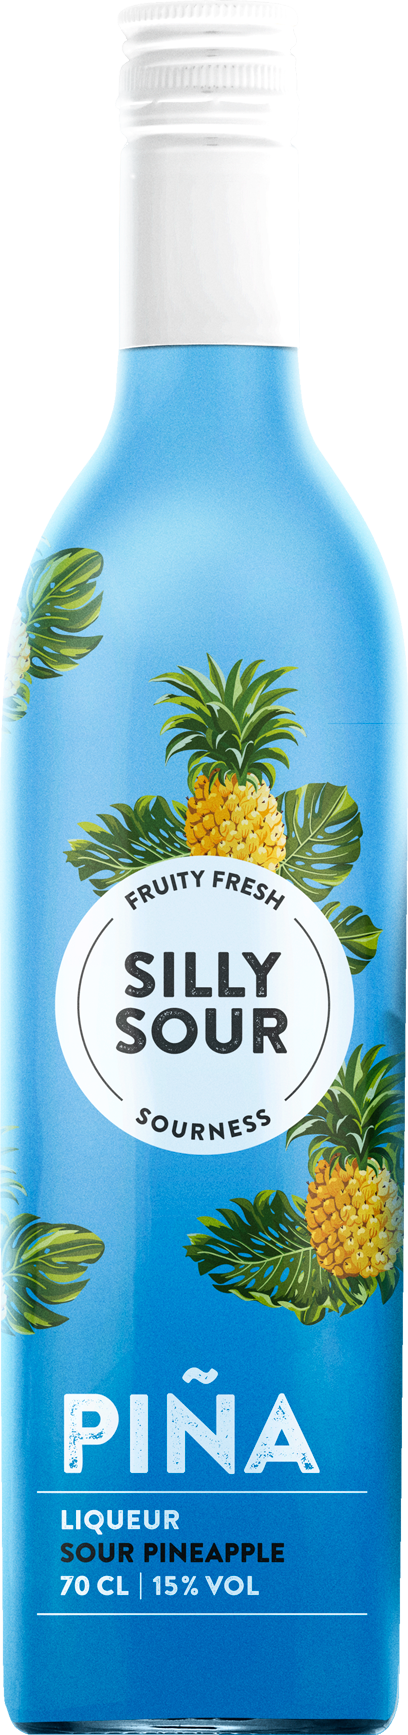 silly pineapple bottle